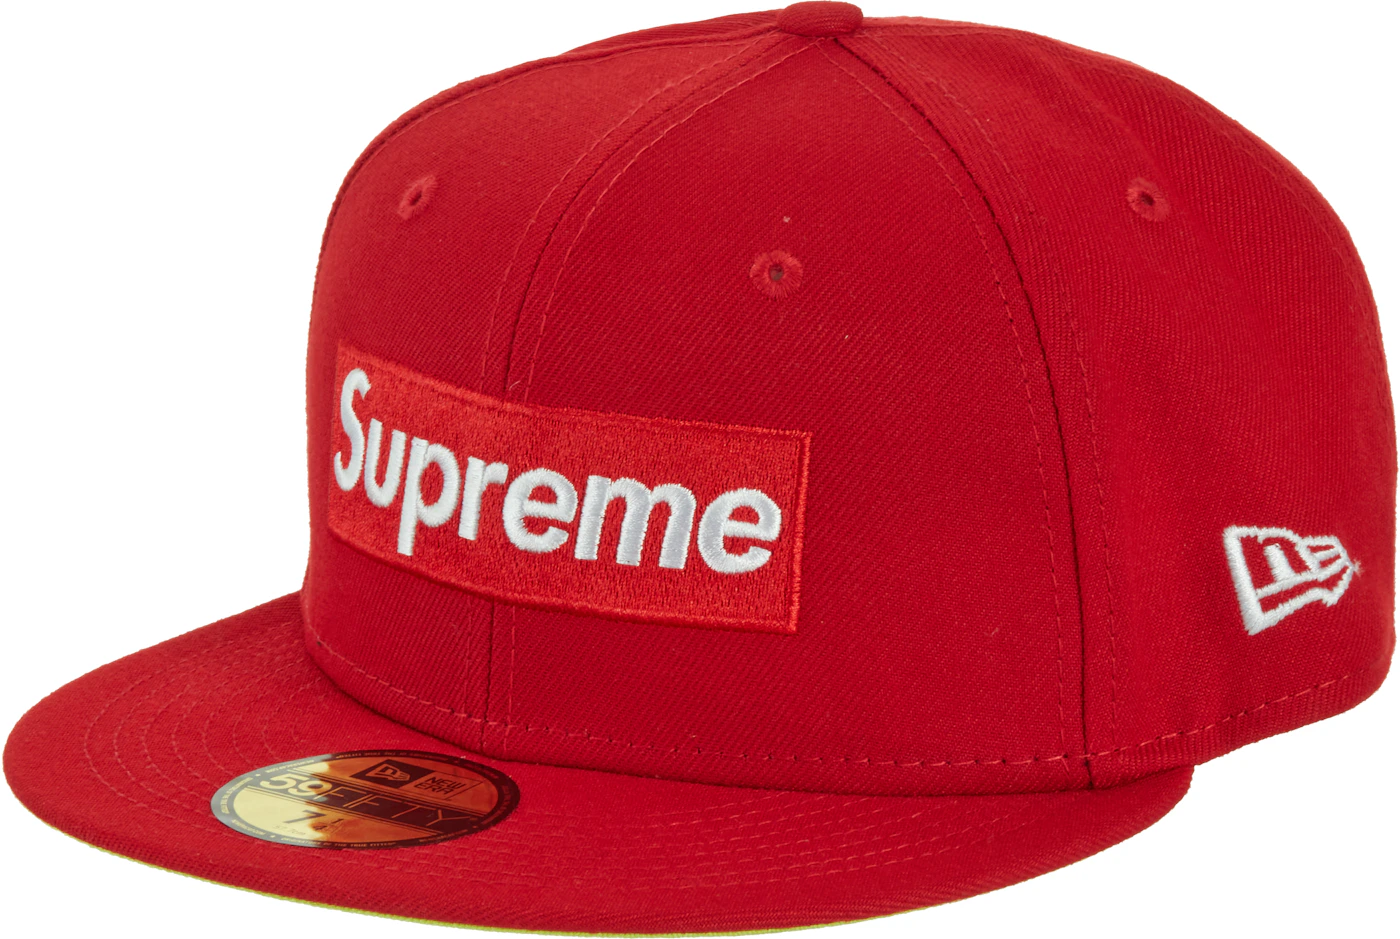 baseball cap red supreme